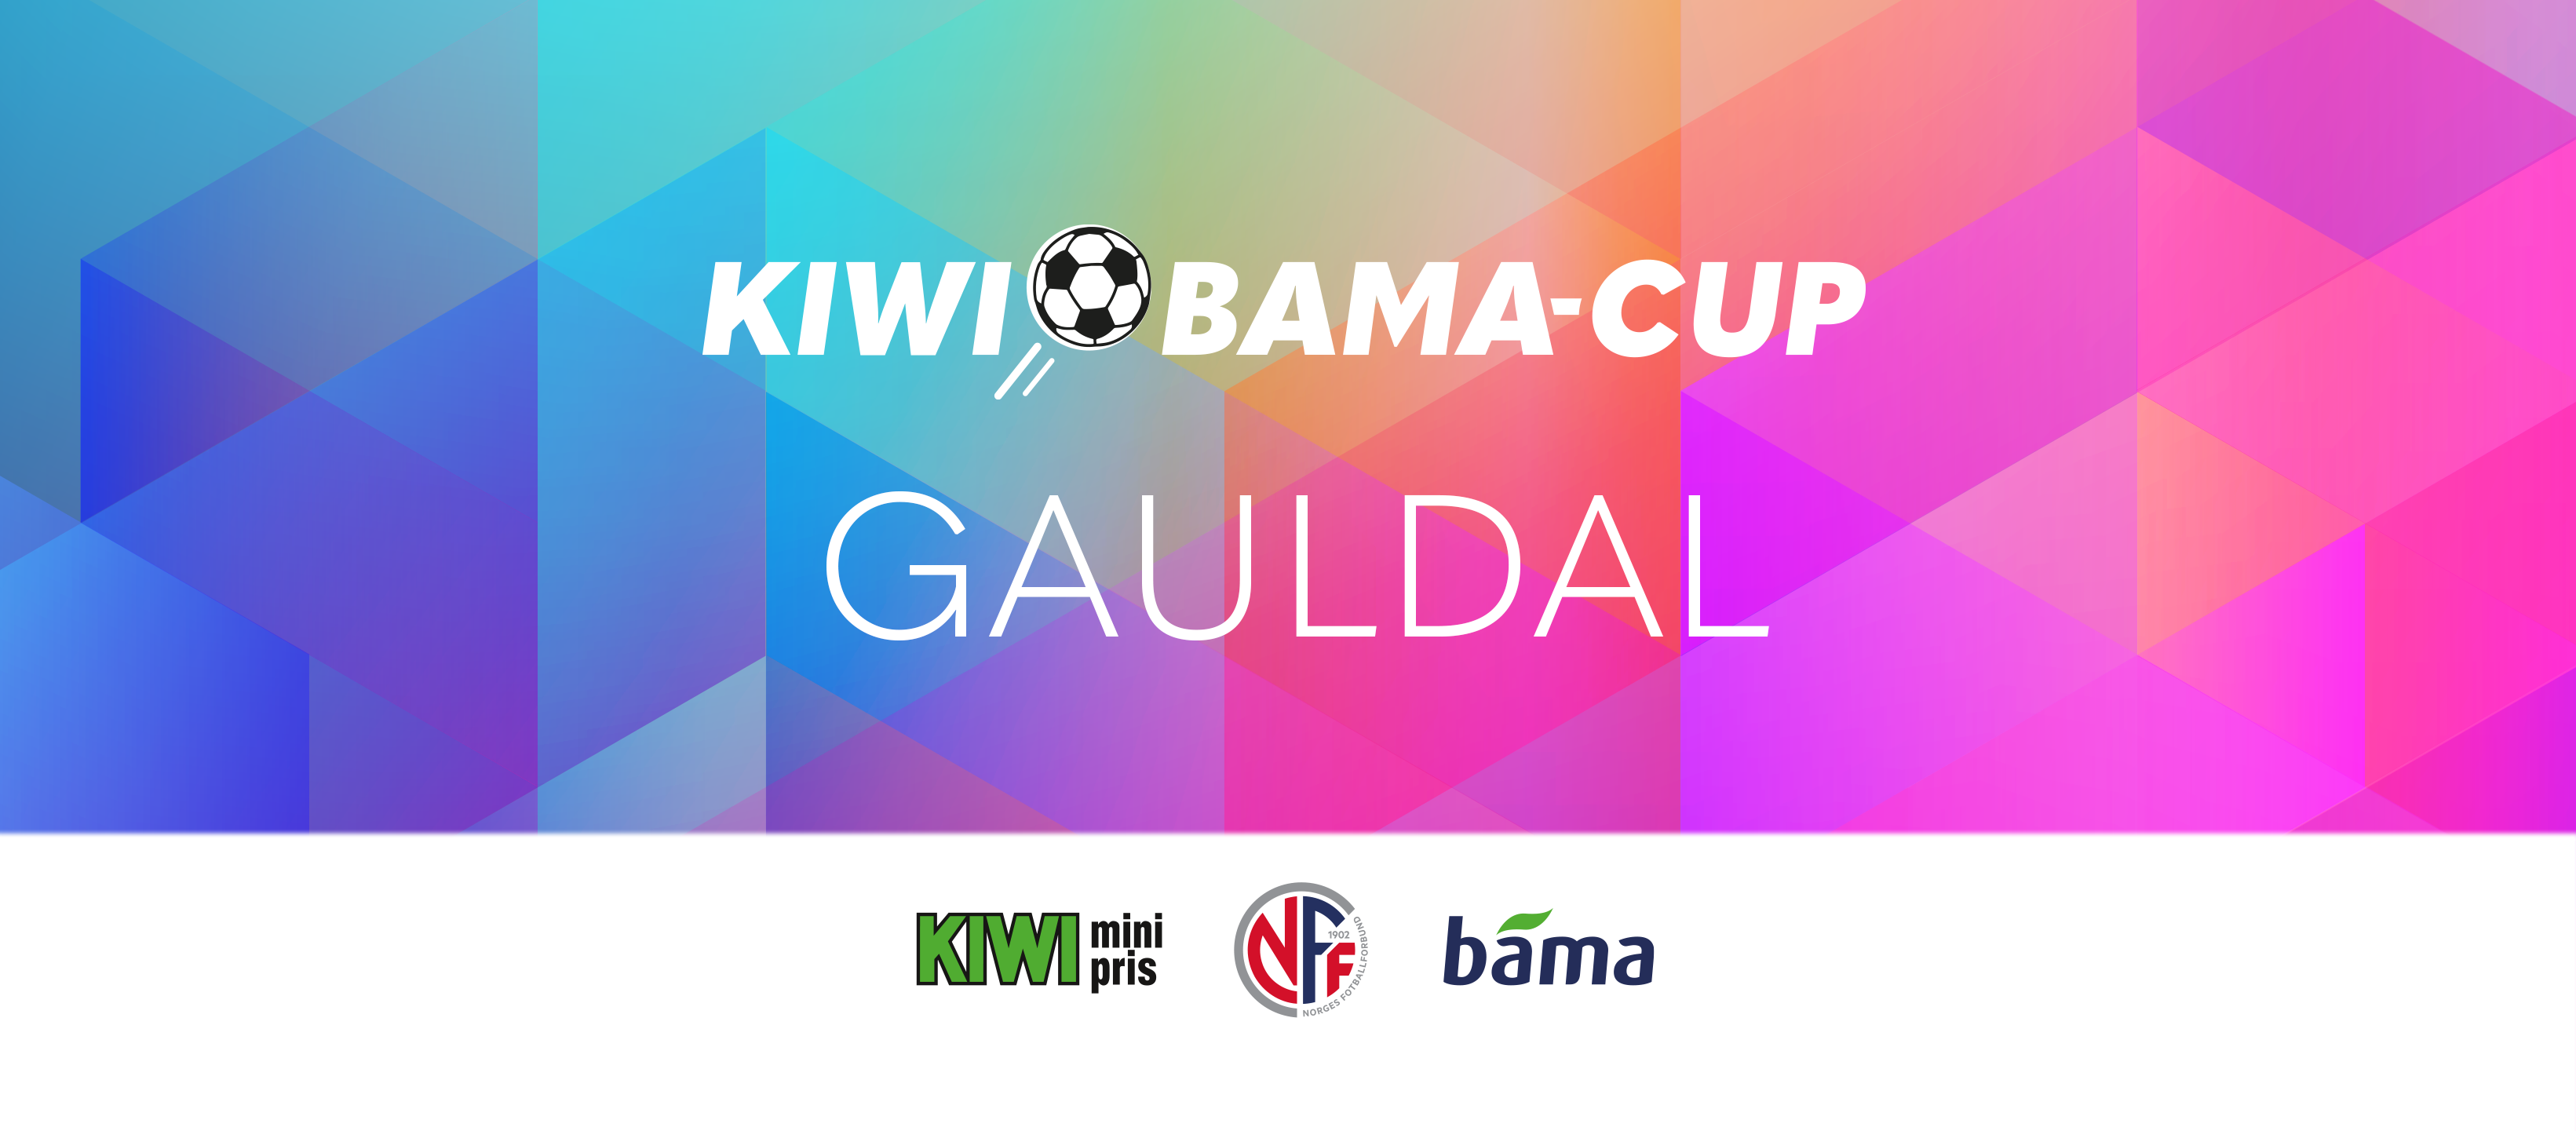 FB-BANNER KIWI-BAMA-Cup - Gauldal.png